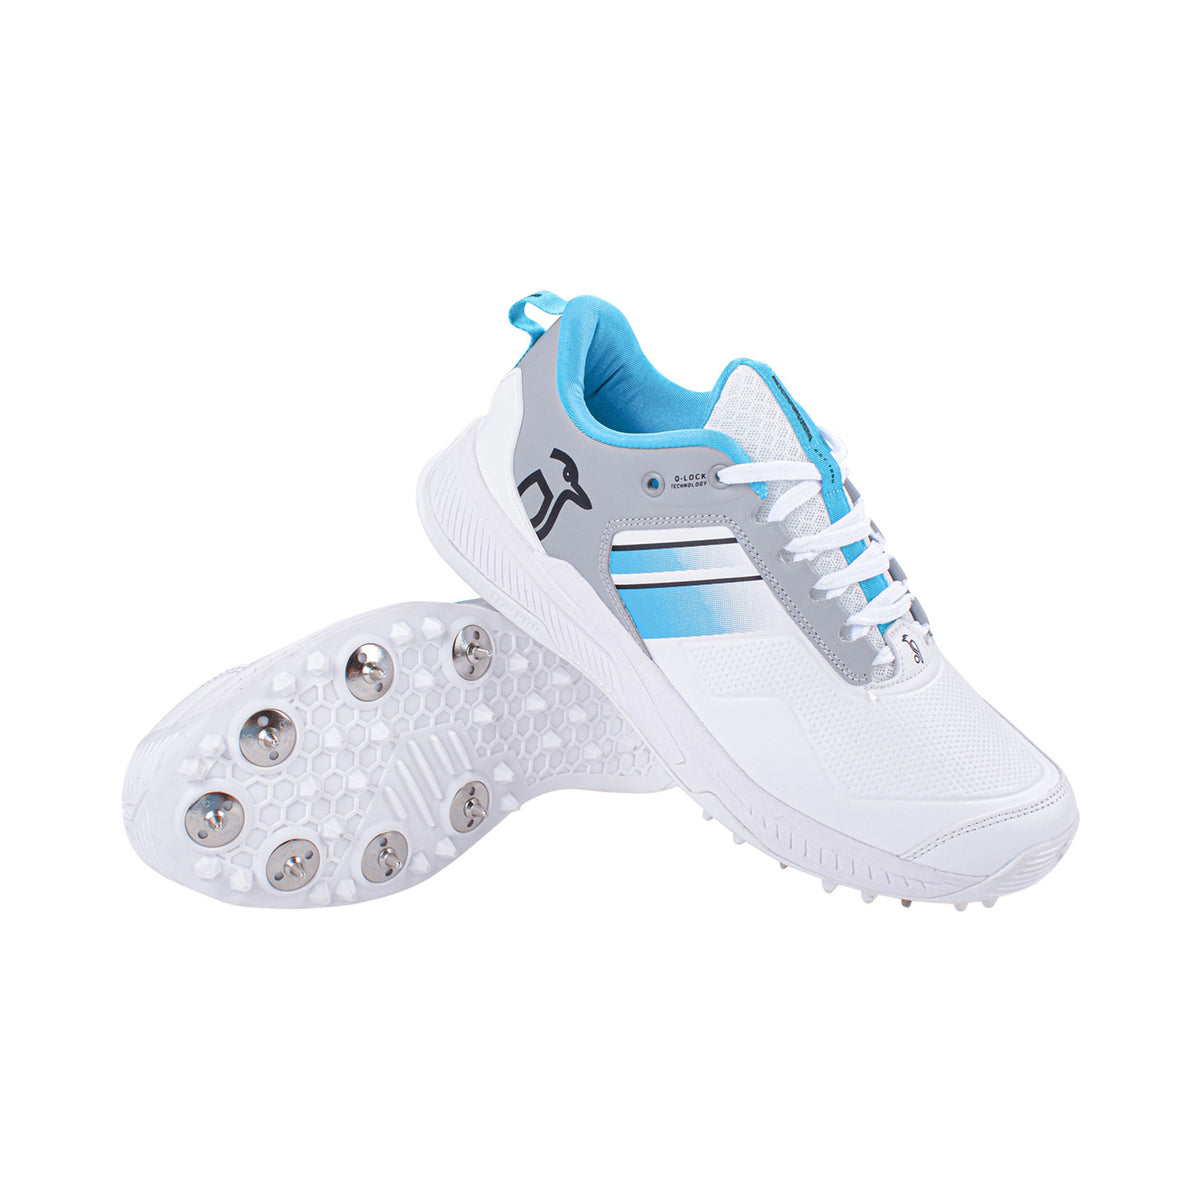 Kookaburra KC 1.0 Spike Cricket Shoes: White/Mint/Grey